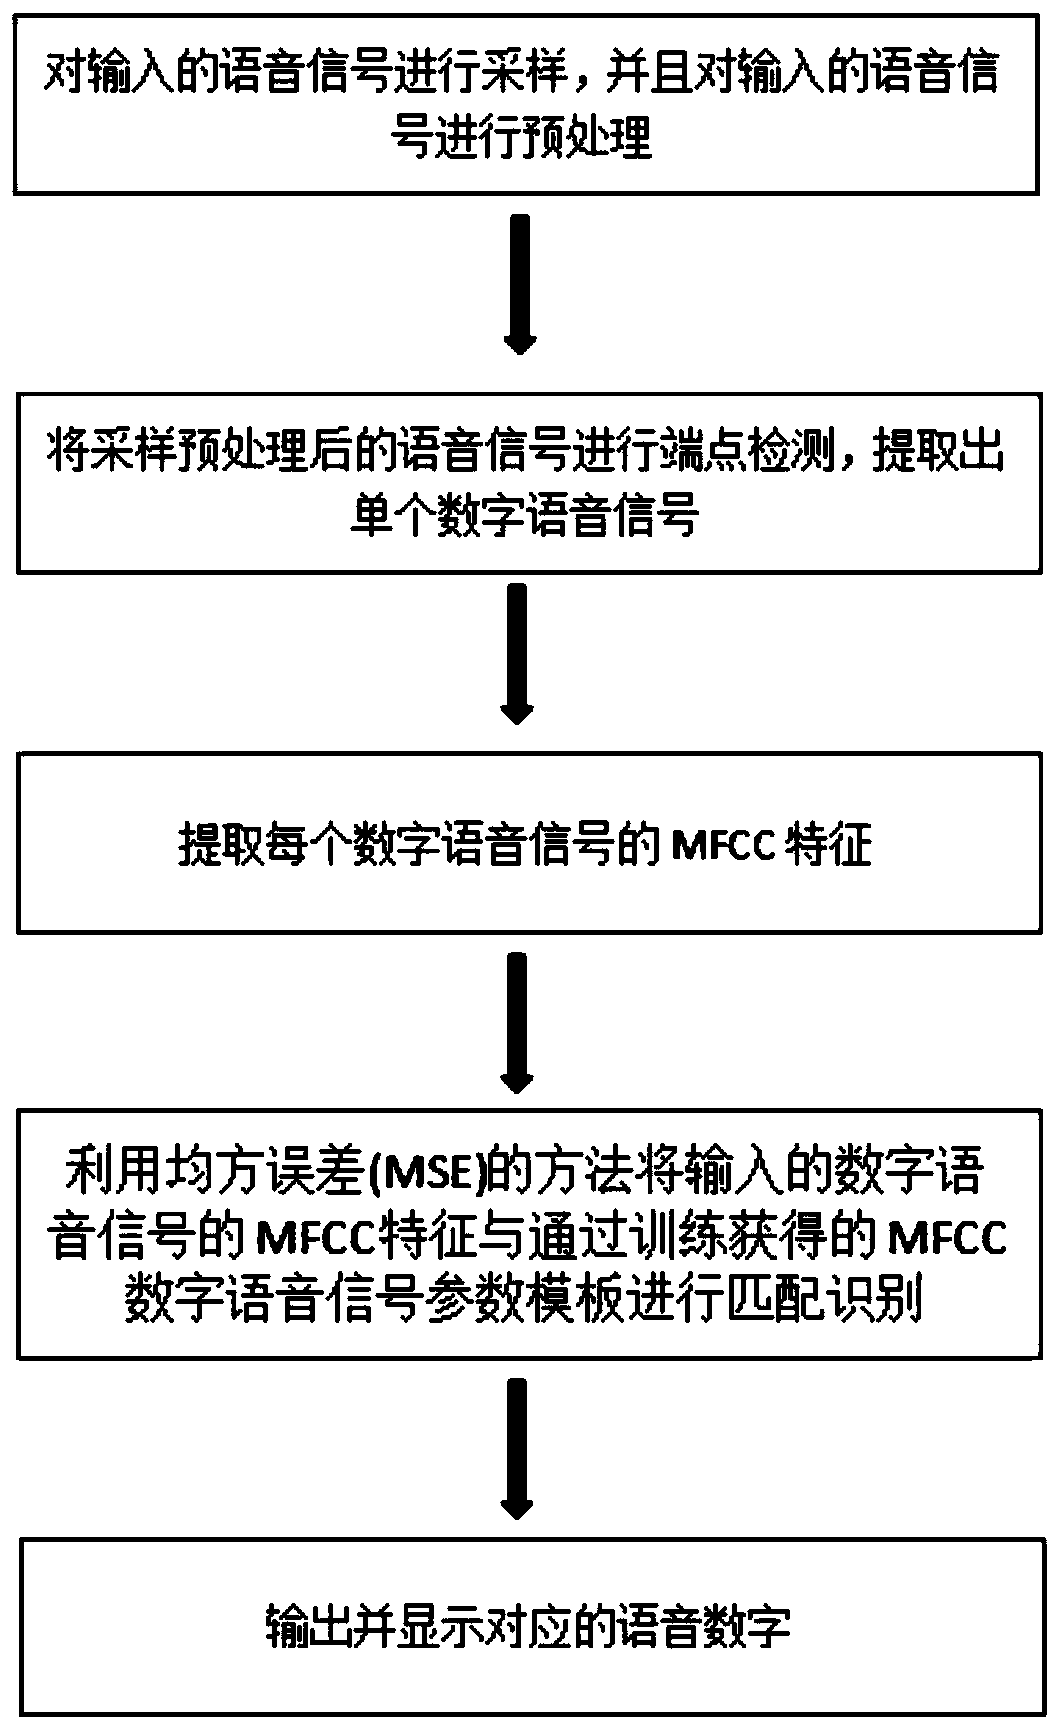 Speech digital recognition method based on MFCC